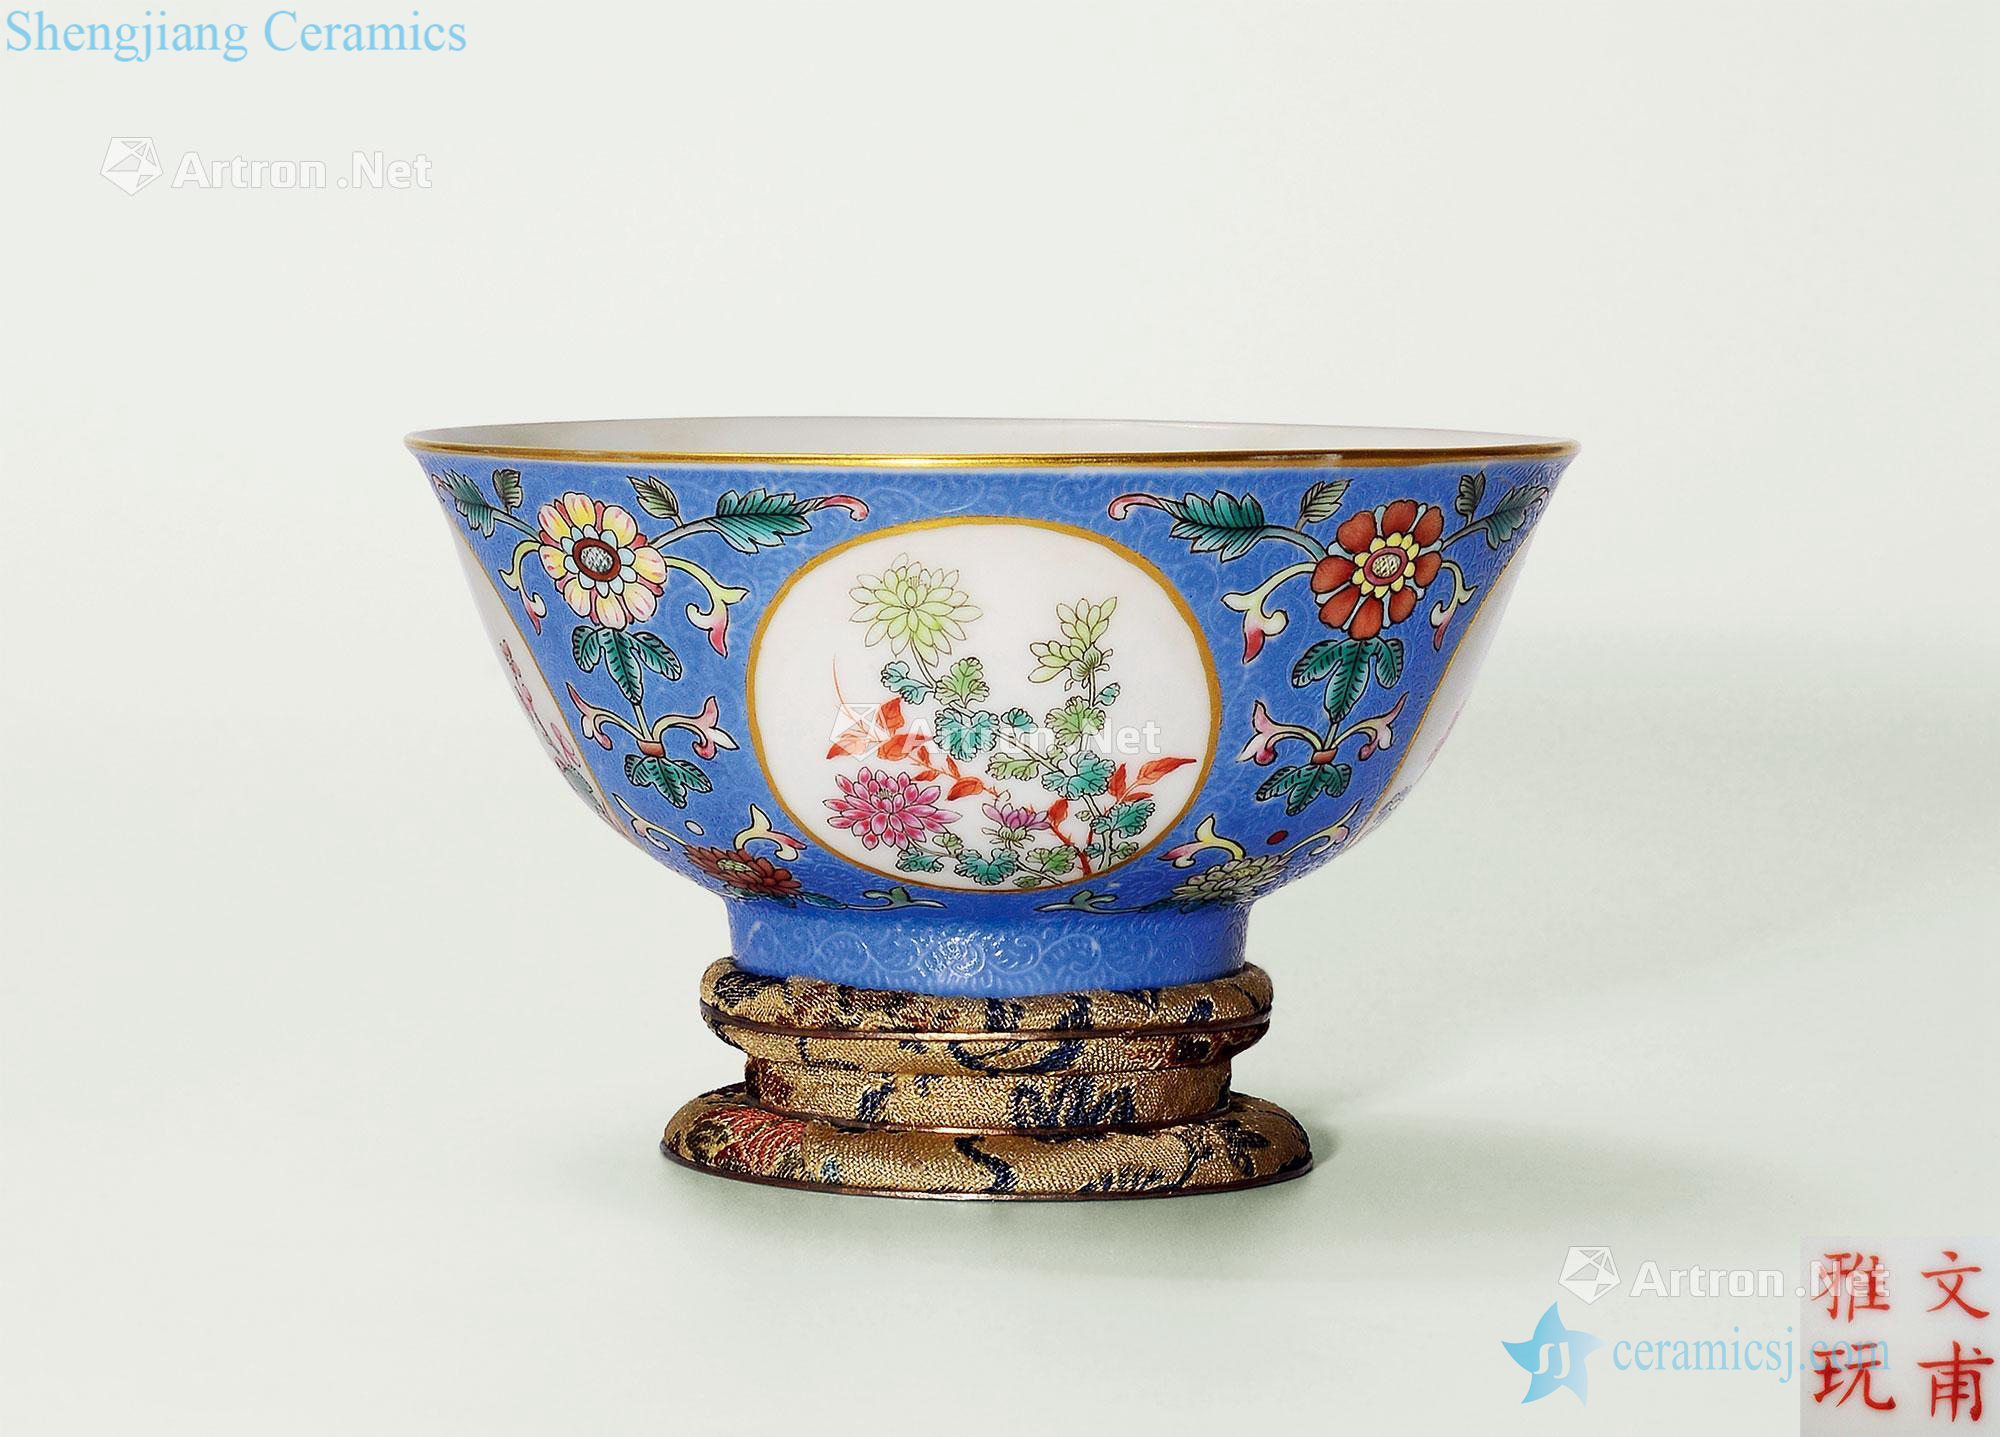 Qing daoguang to rolling way pastel blue passionflower medallion chrysanthemum green-splashed bowls